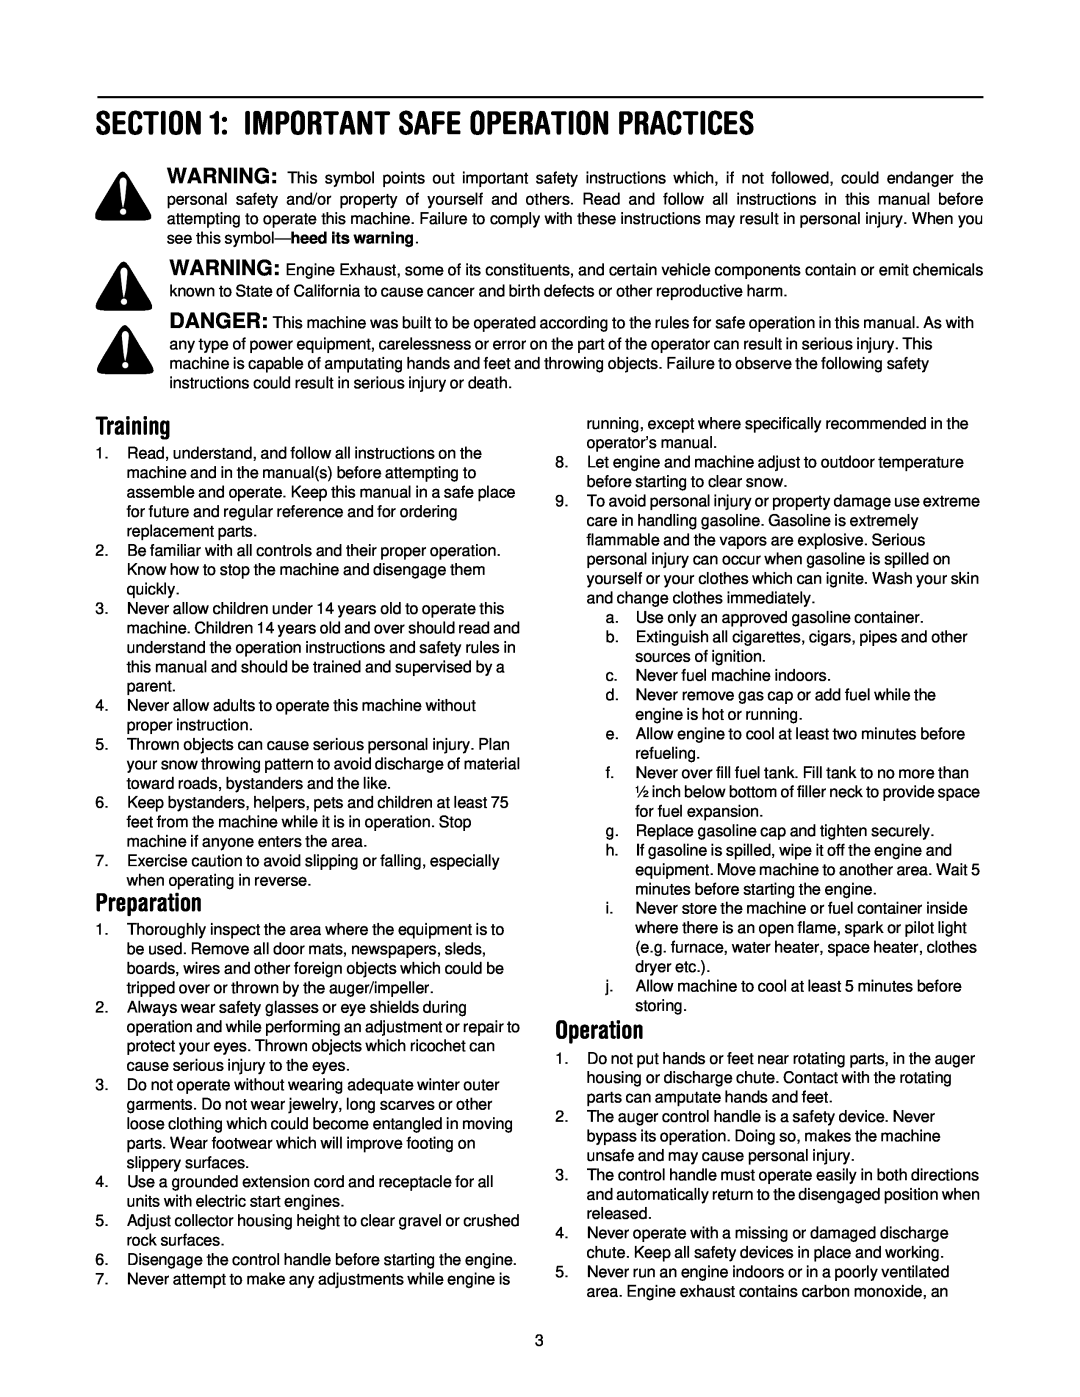 Troy-Bilt 500 series manual Important Safe Operation Practices, Training, Preparation 